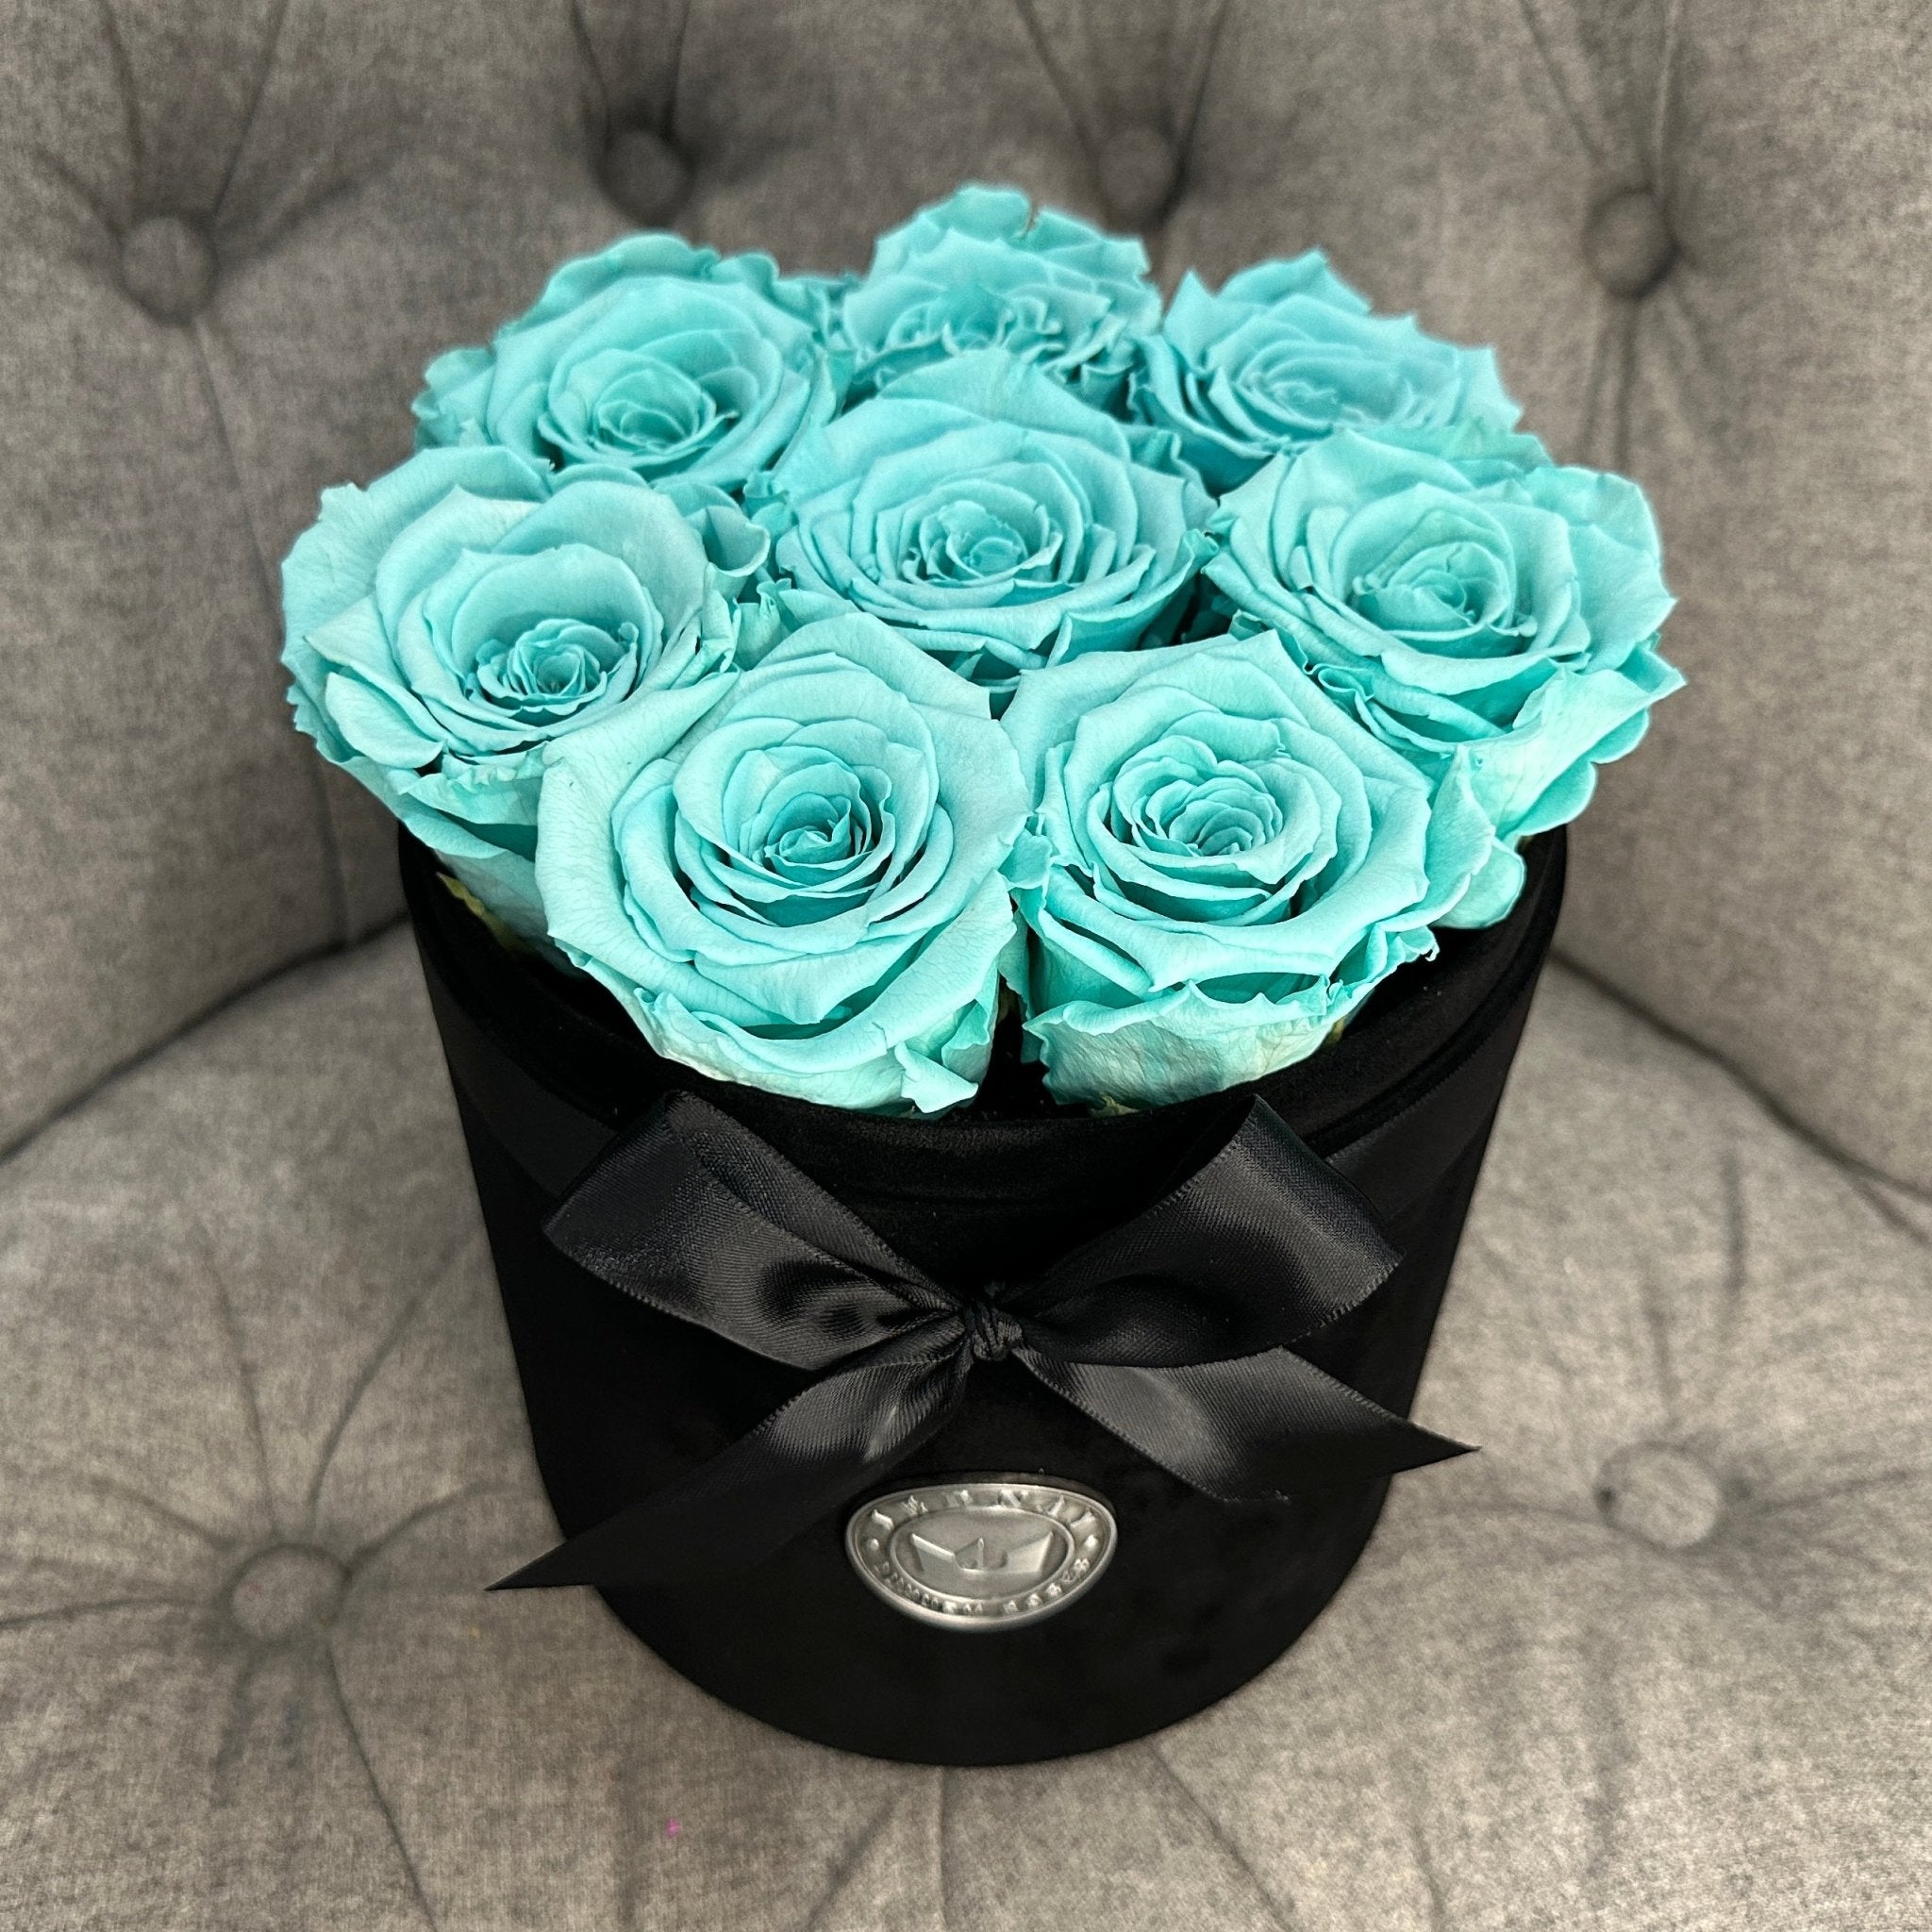 Medium Black Suede Forever Rose Box - Tiffany Blue Eternal Roses - Jednay Roses